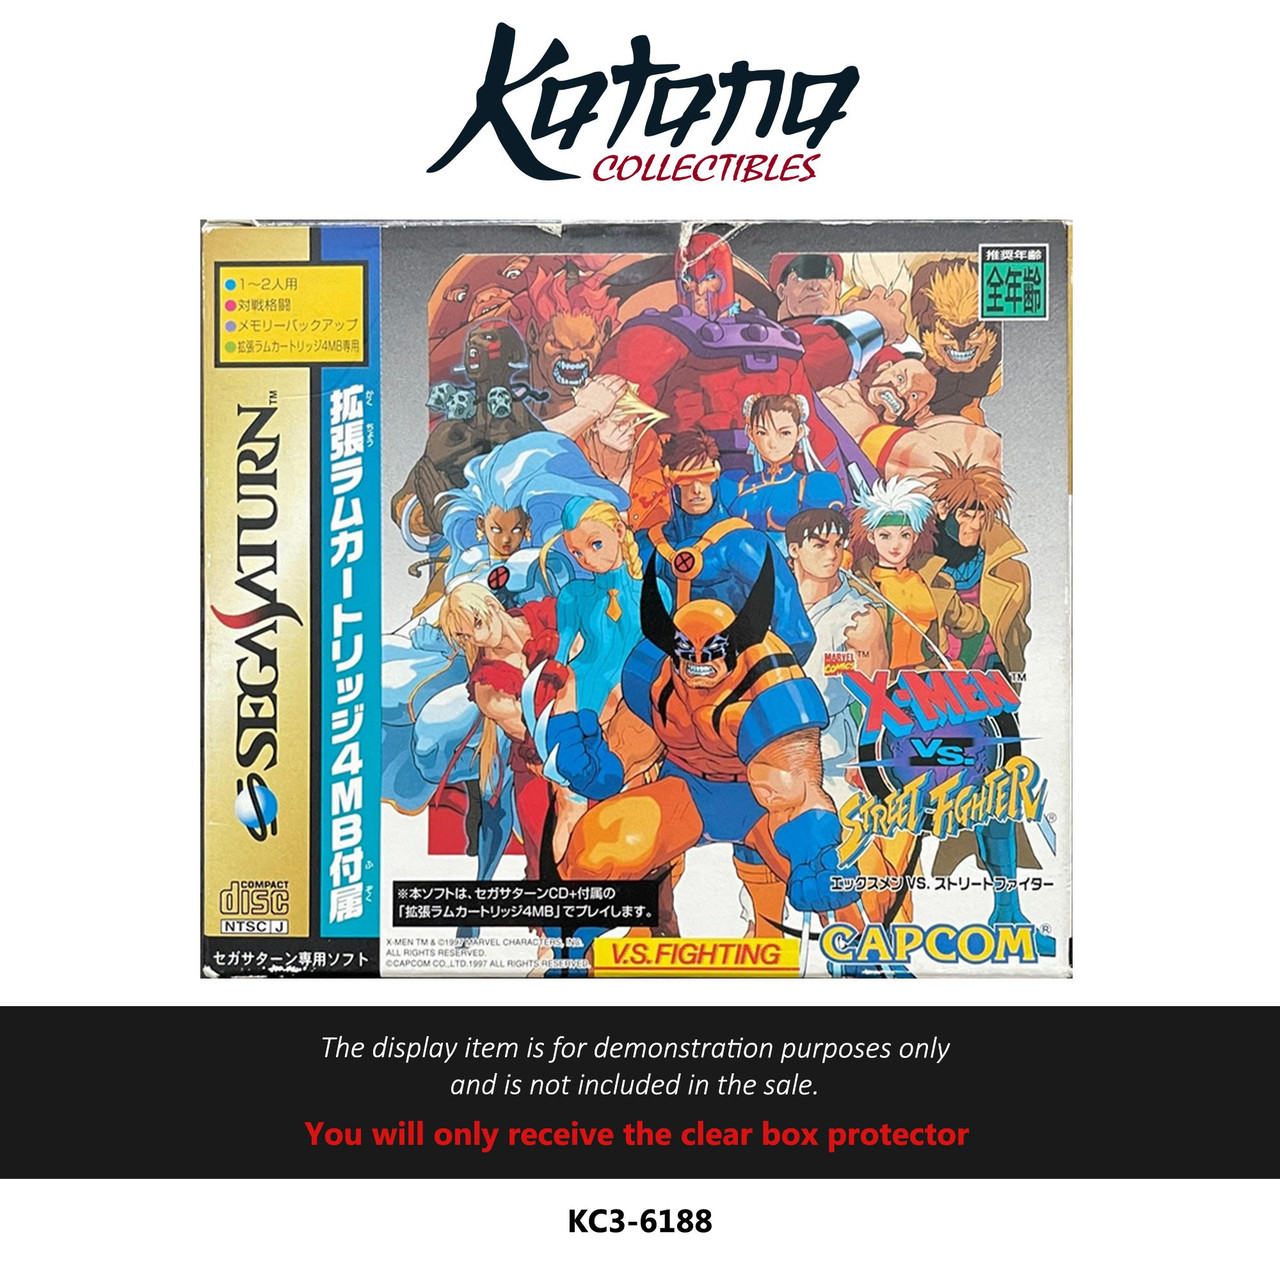 Katana Collectibles Protector For Sega Saturn Capcom X-Men VS Street Fighter Japanese Version